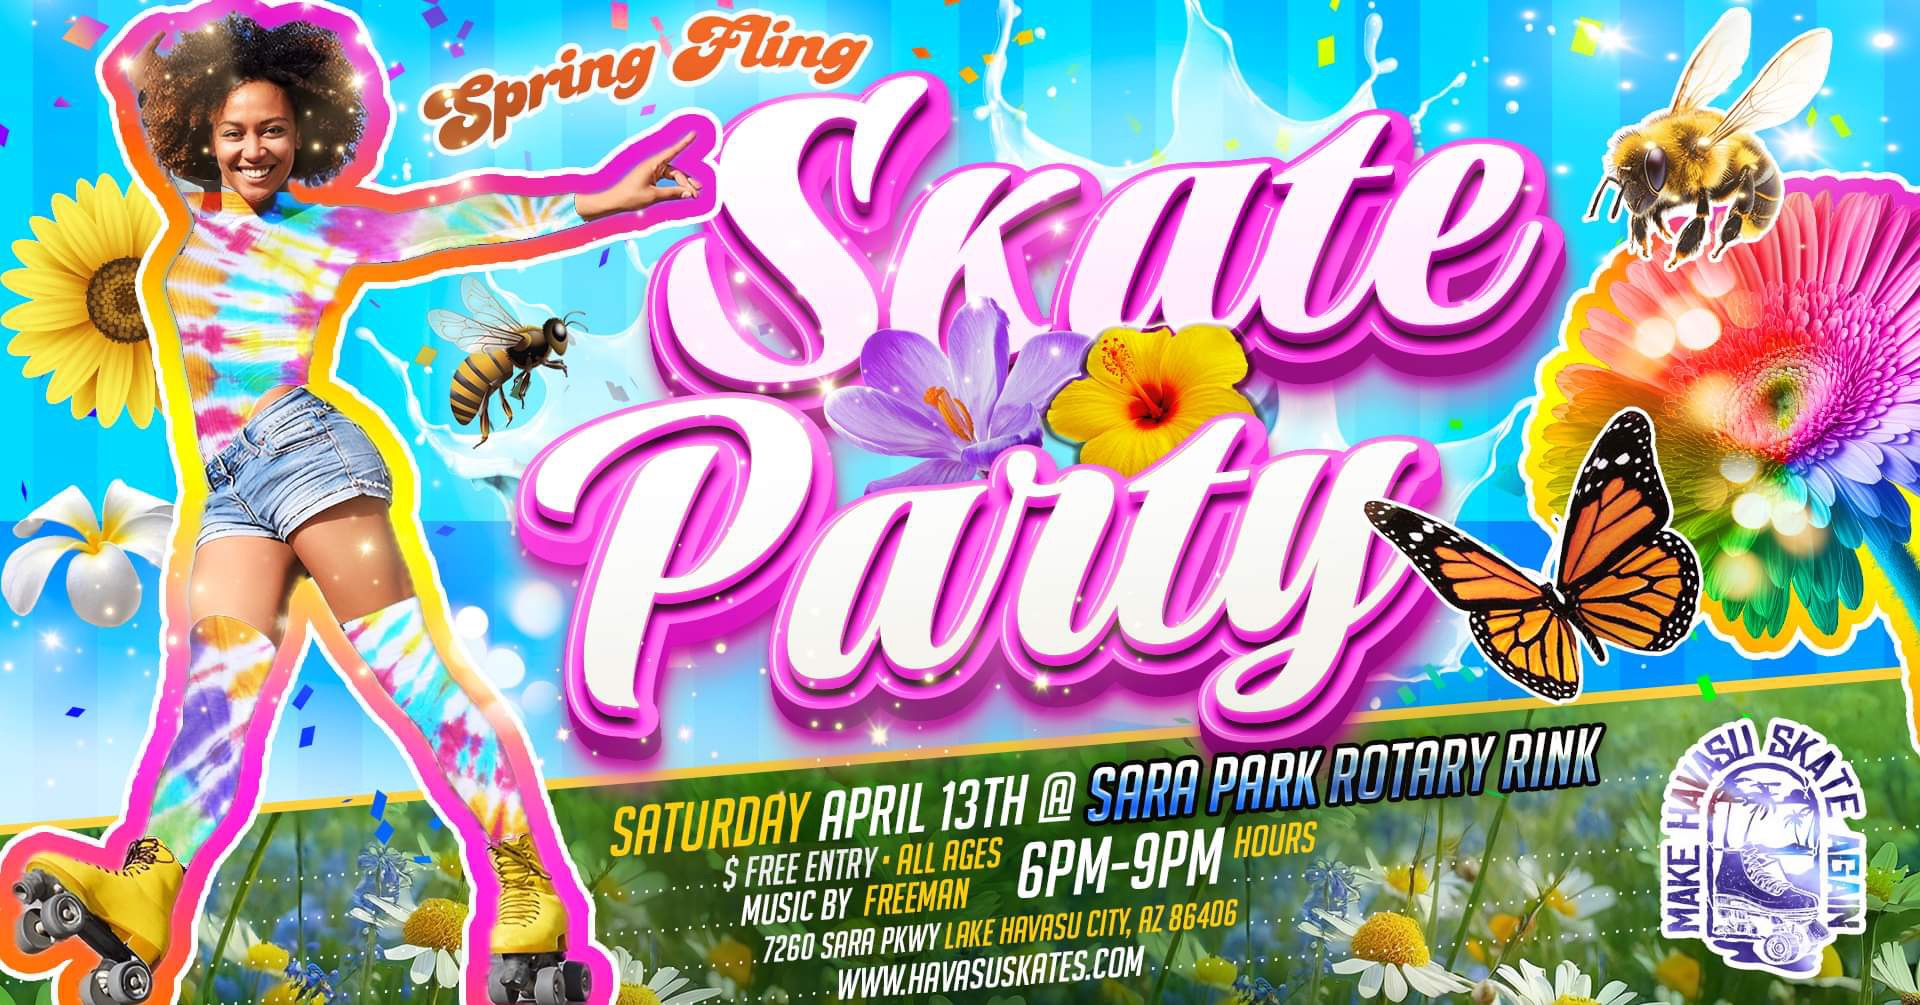 Spring Fling Skate Party